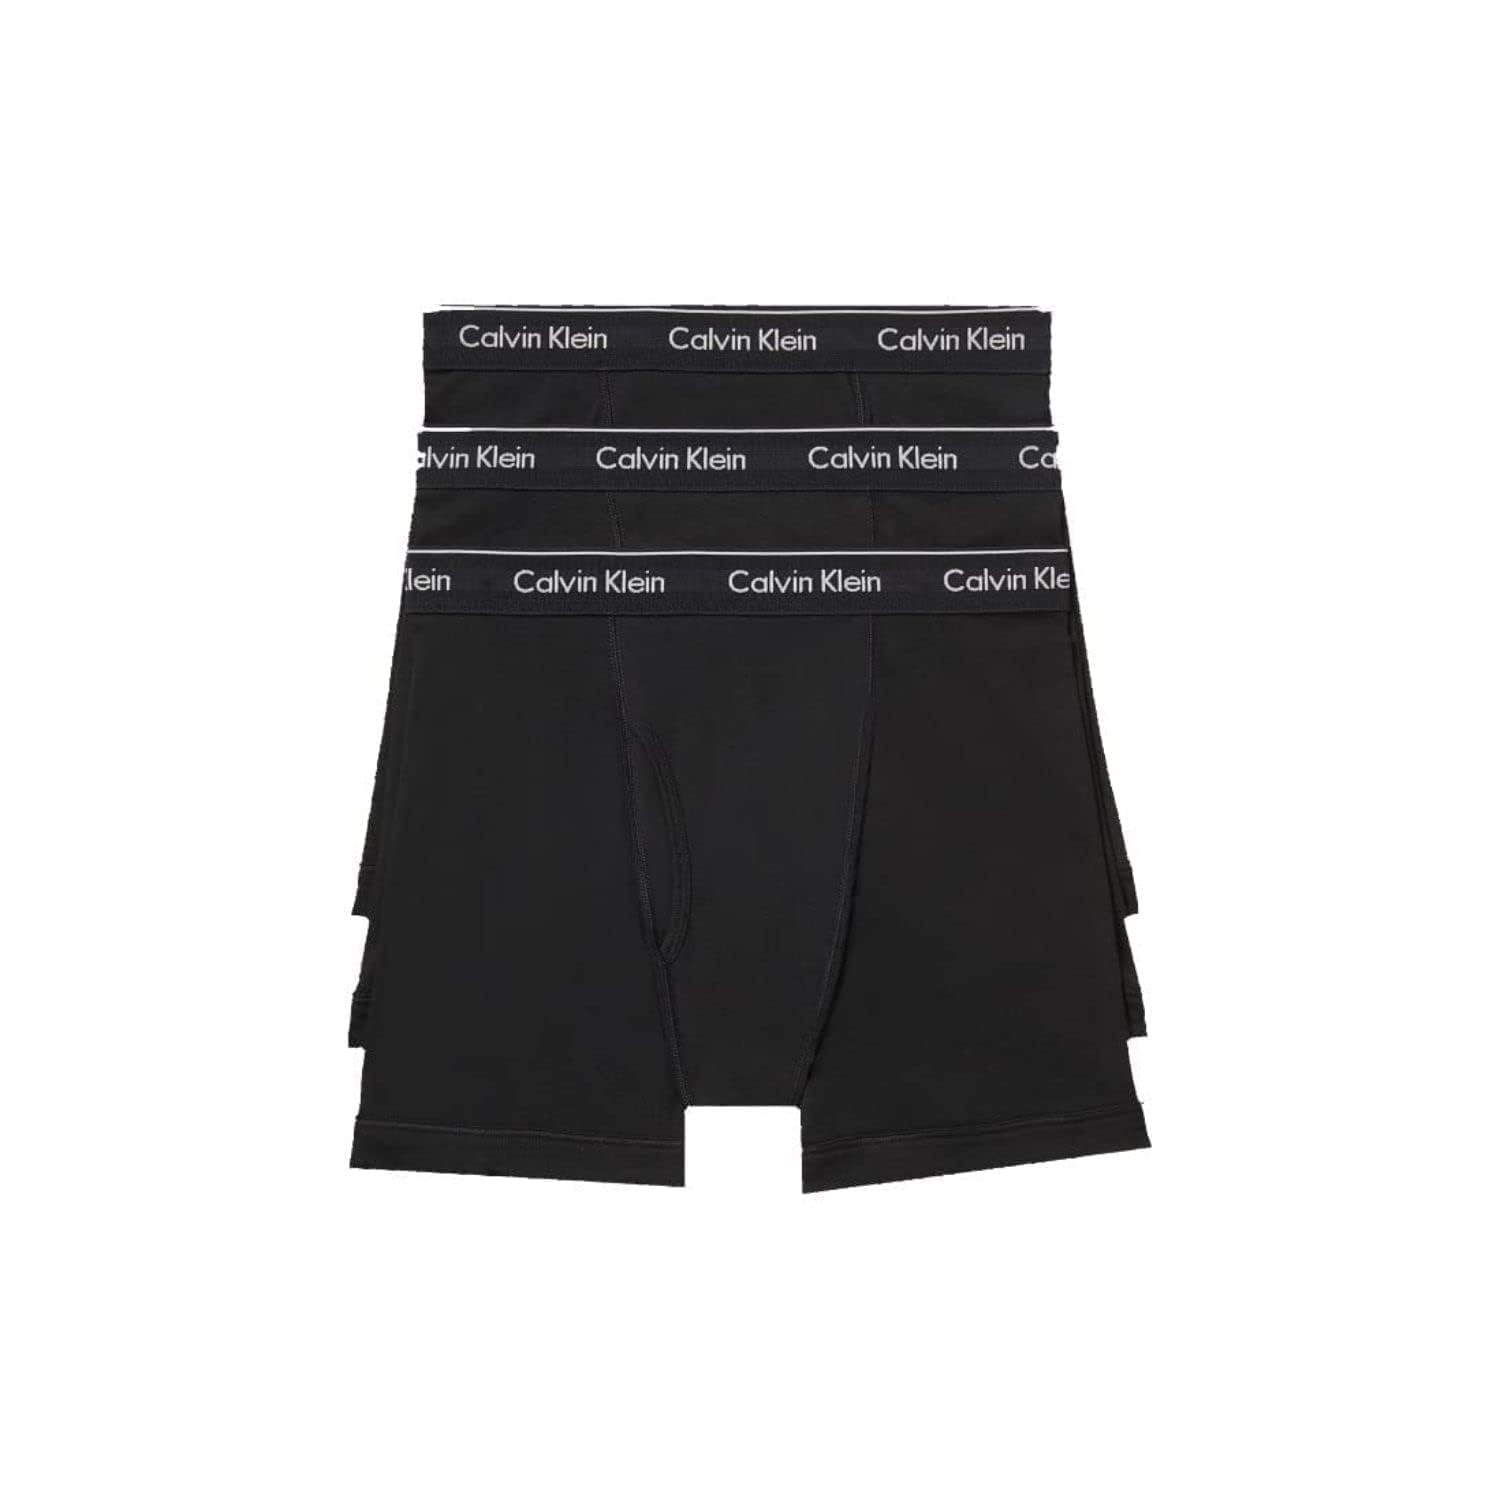 Mua Calvin Klein Men's Cotton Classics 3-Pack Boxer Brief trên Amazon ...